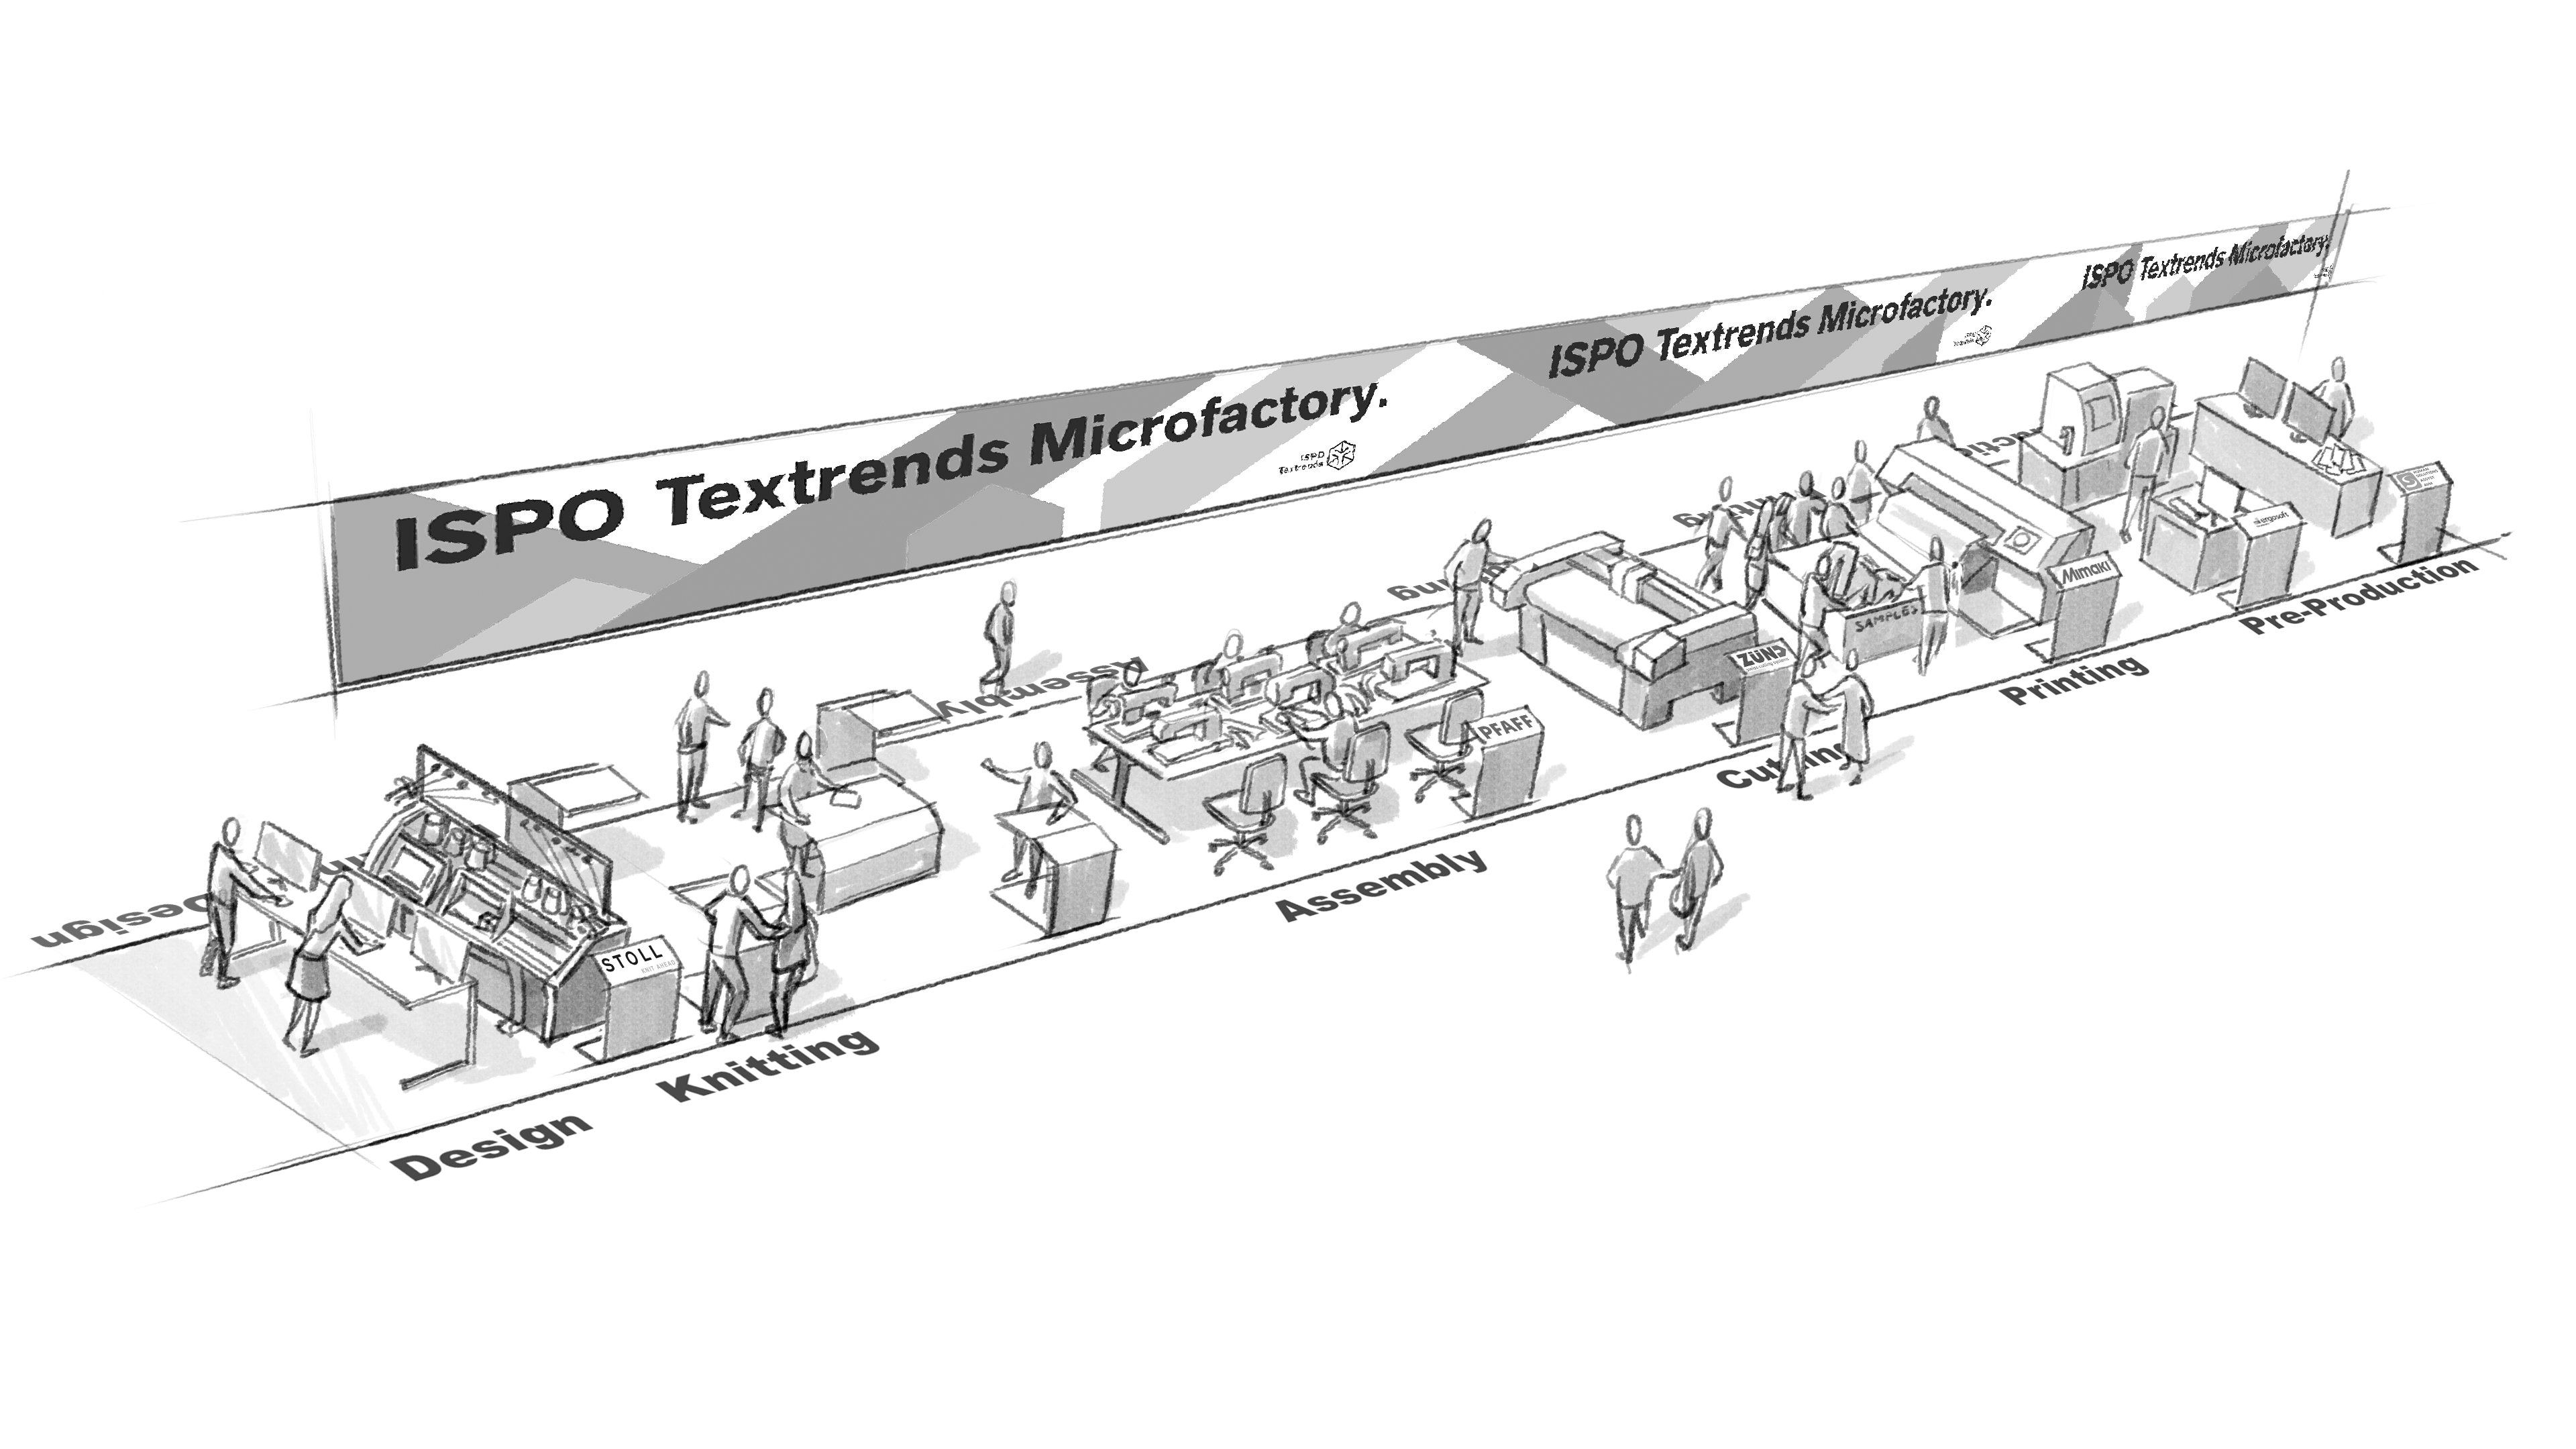 ISPO Textrends Microfactory